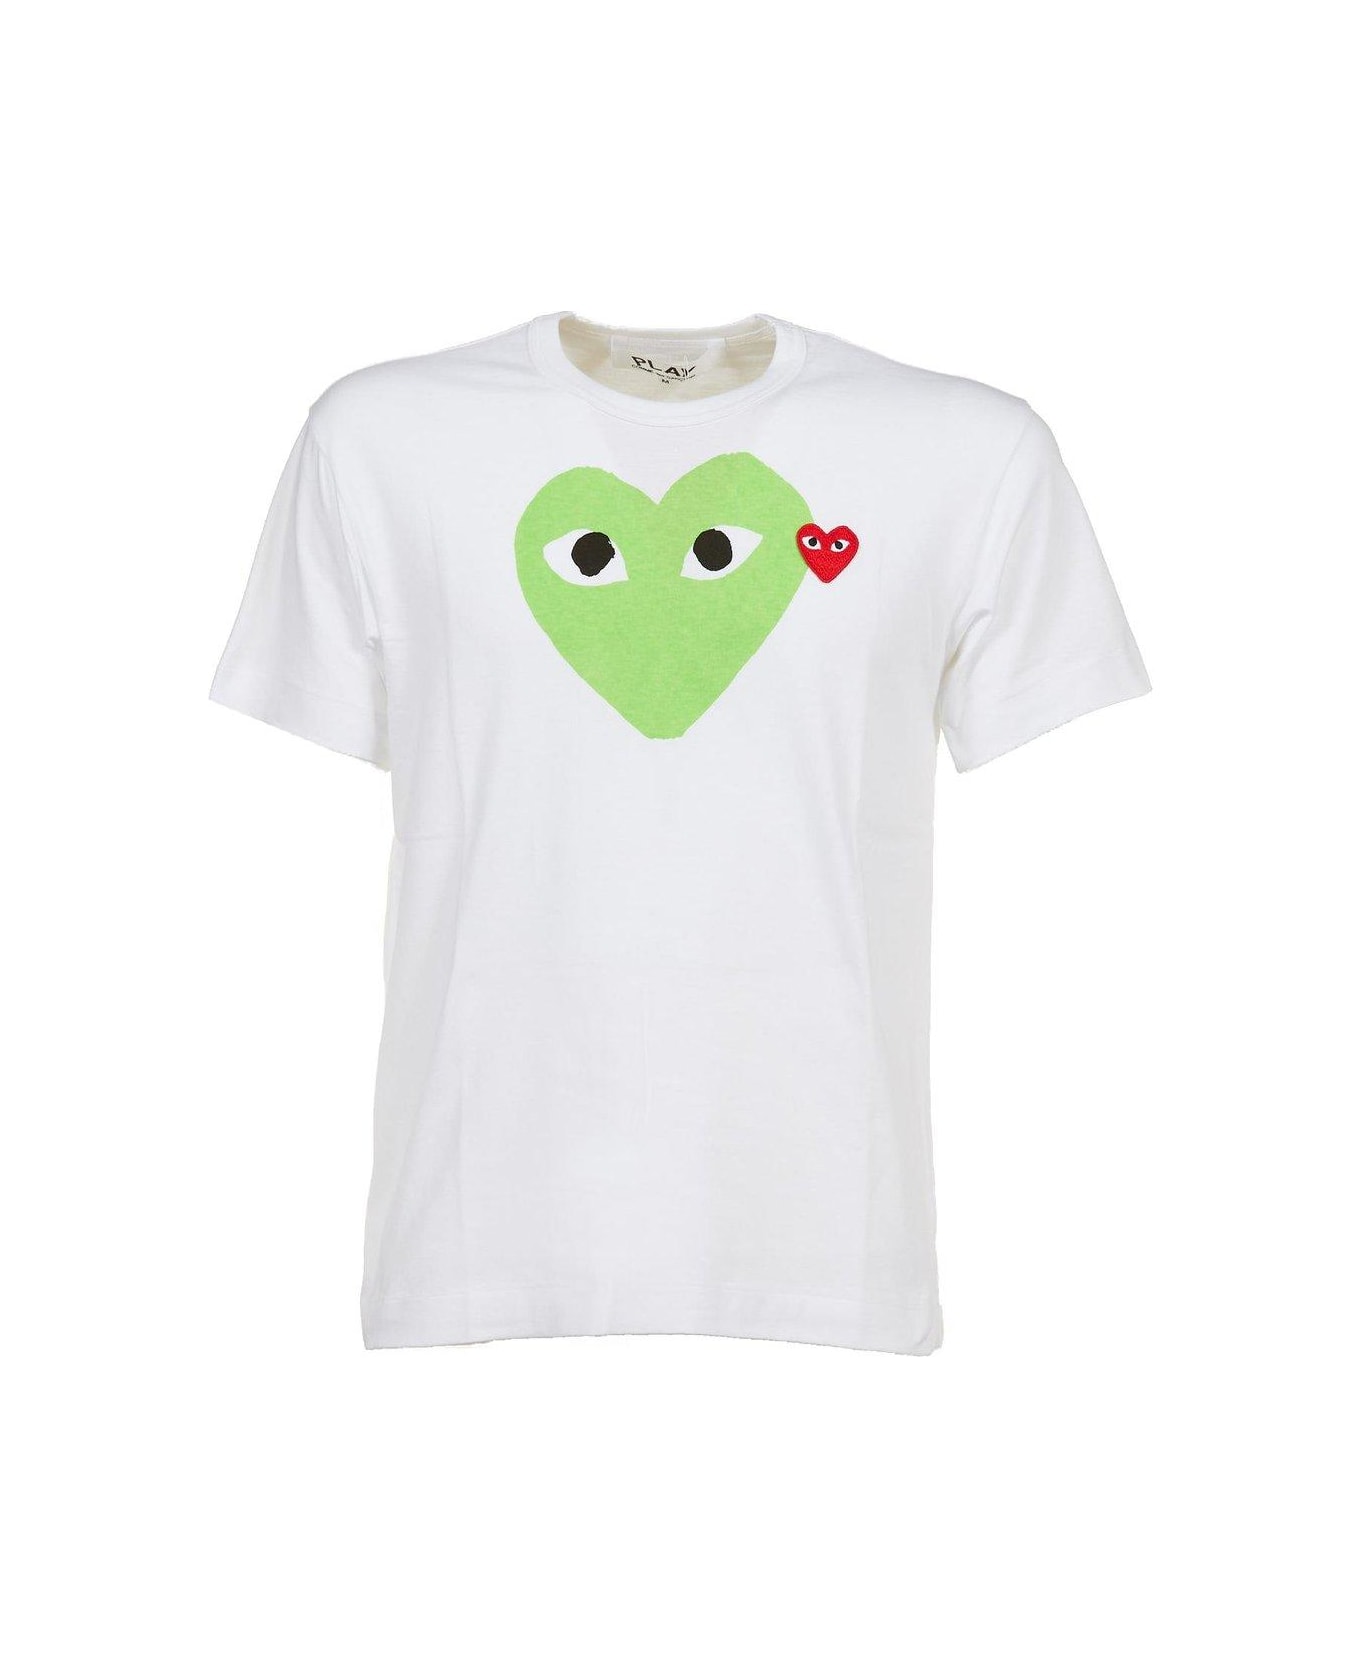 Comme des Garçons Play Hearts Printed T-shirt - Green